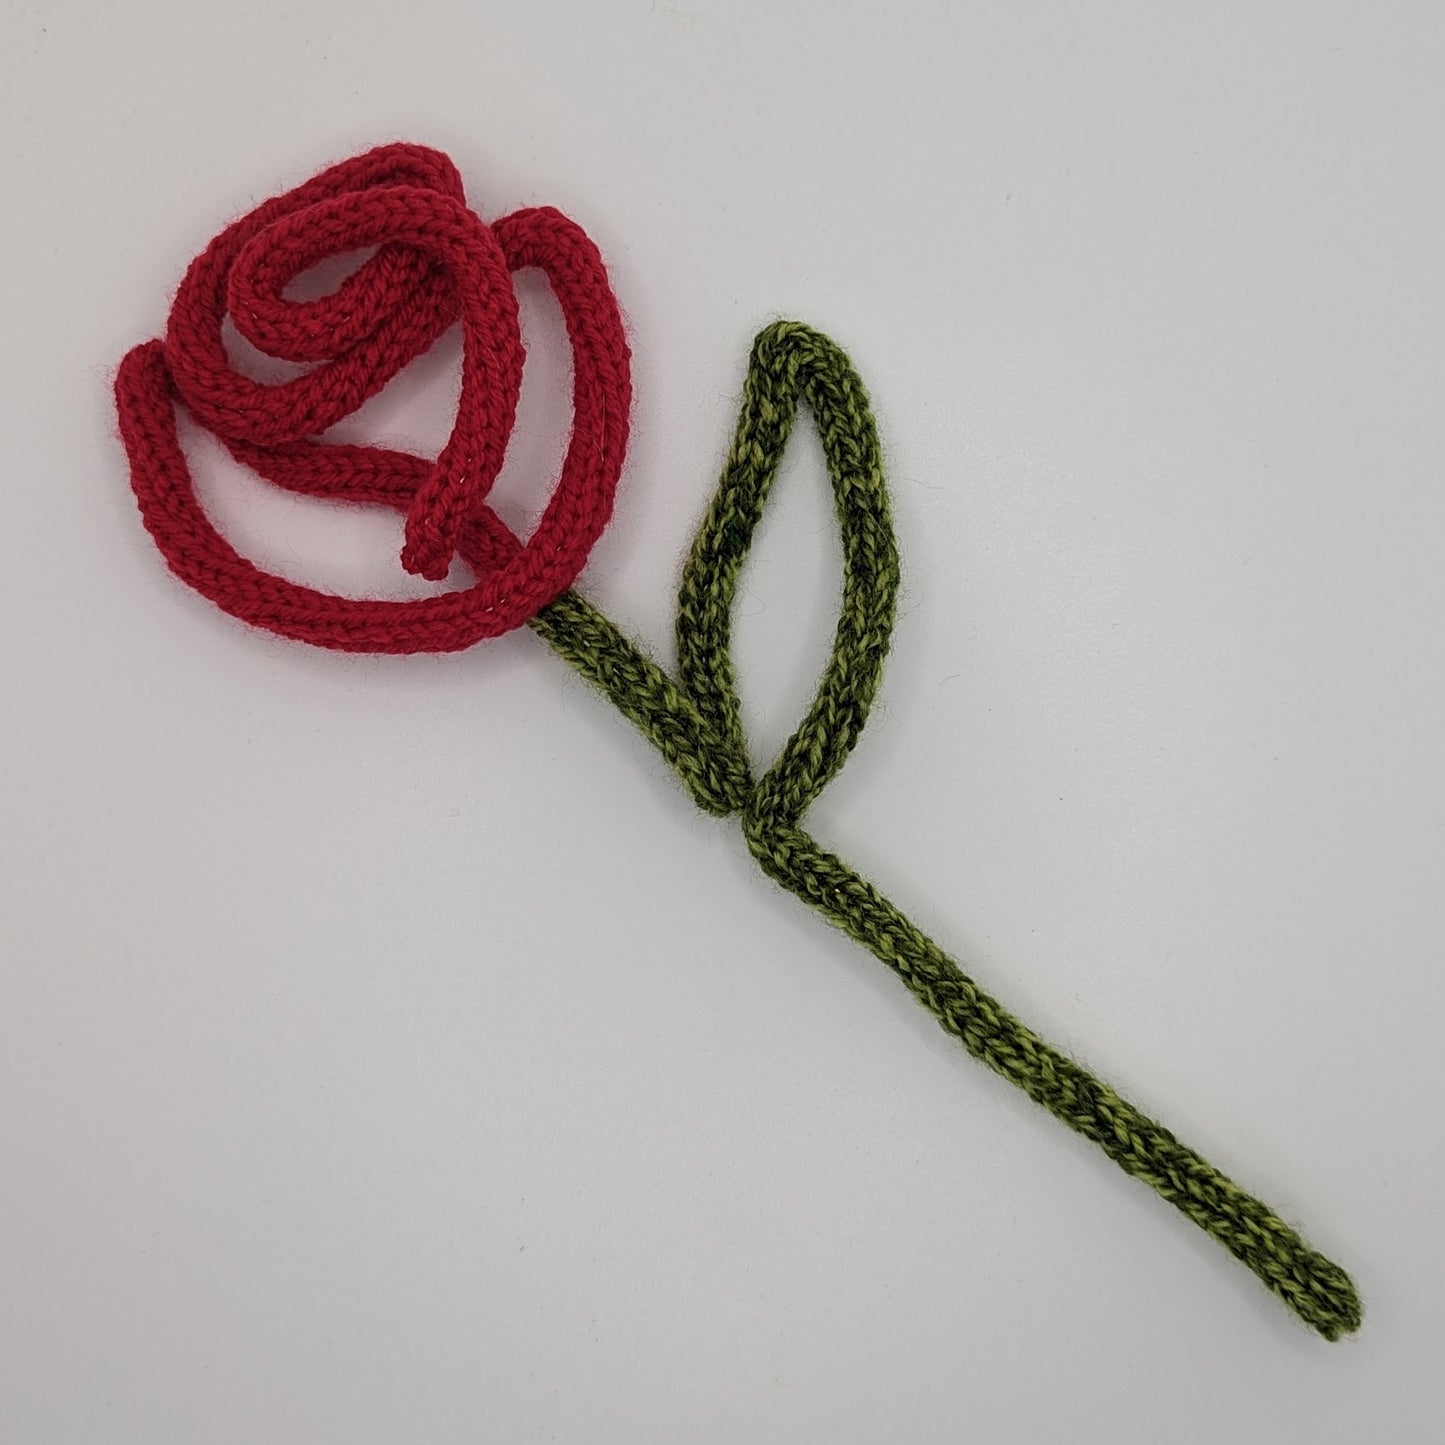 Rose wire flower stem